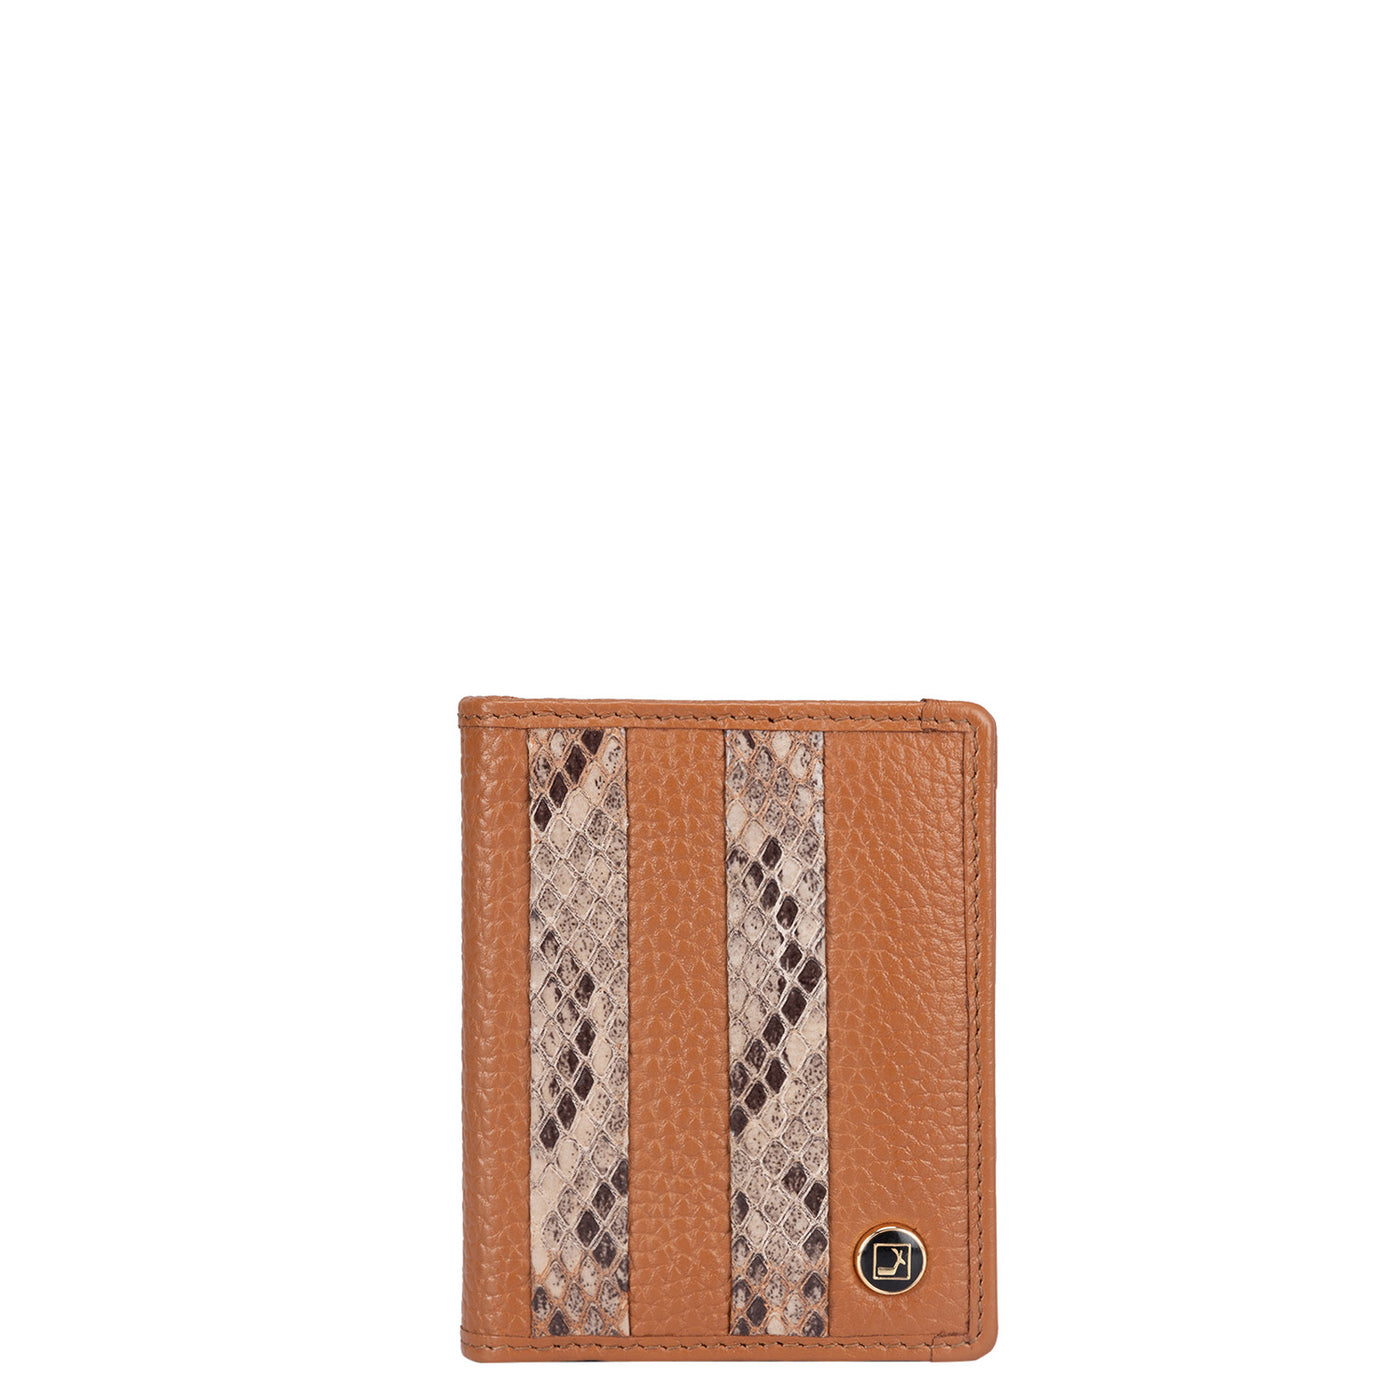 Wax Snake Leather Card Case - Caramel